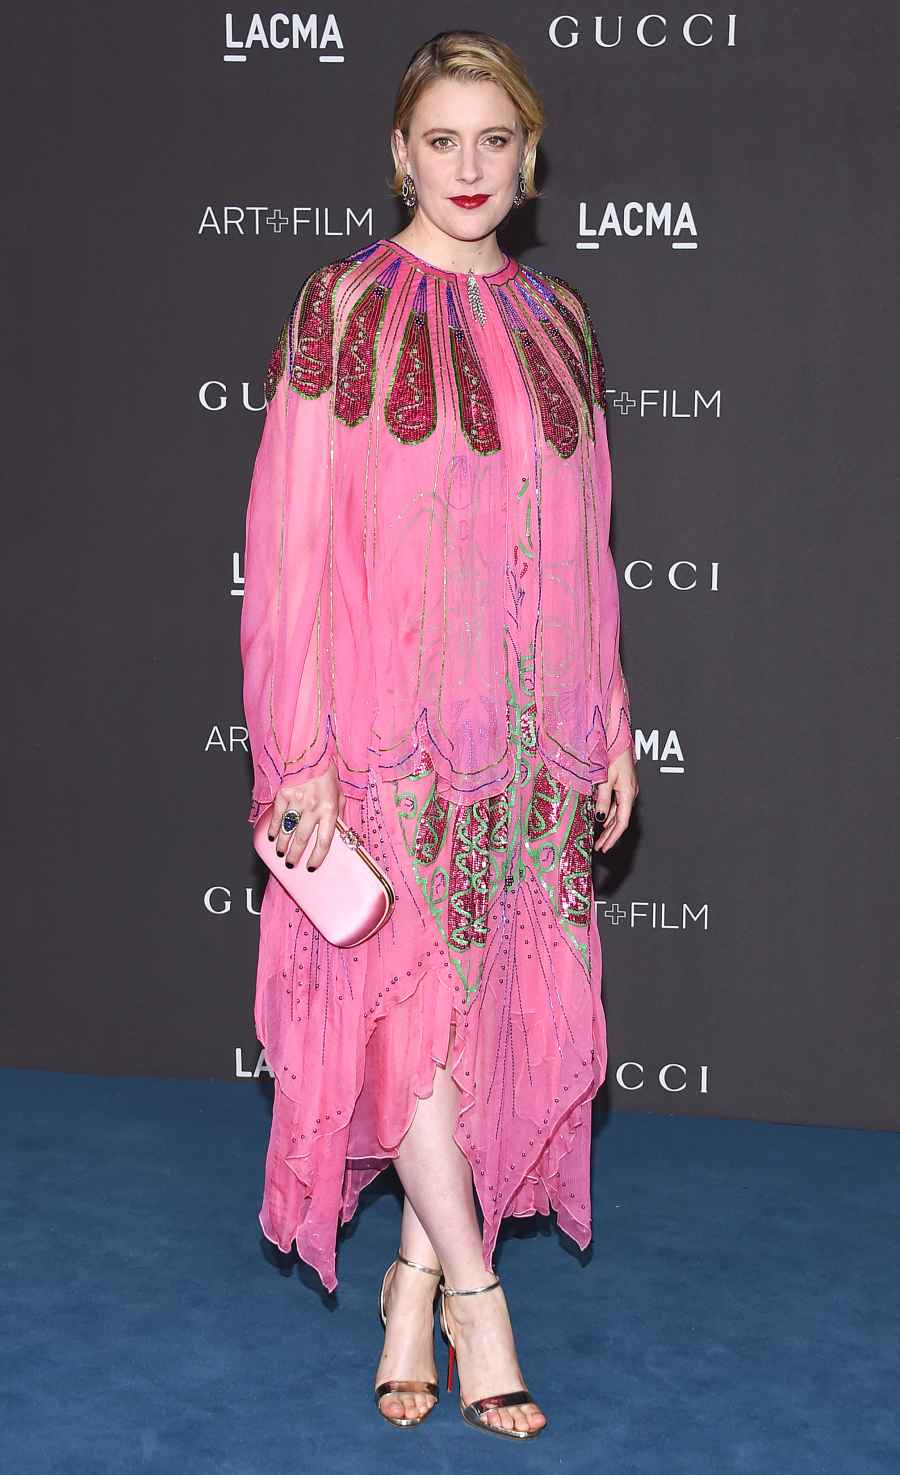 Celebs Wearing Gucci - Greta Gerwig